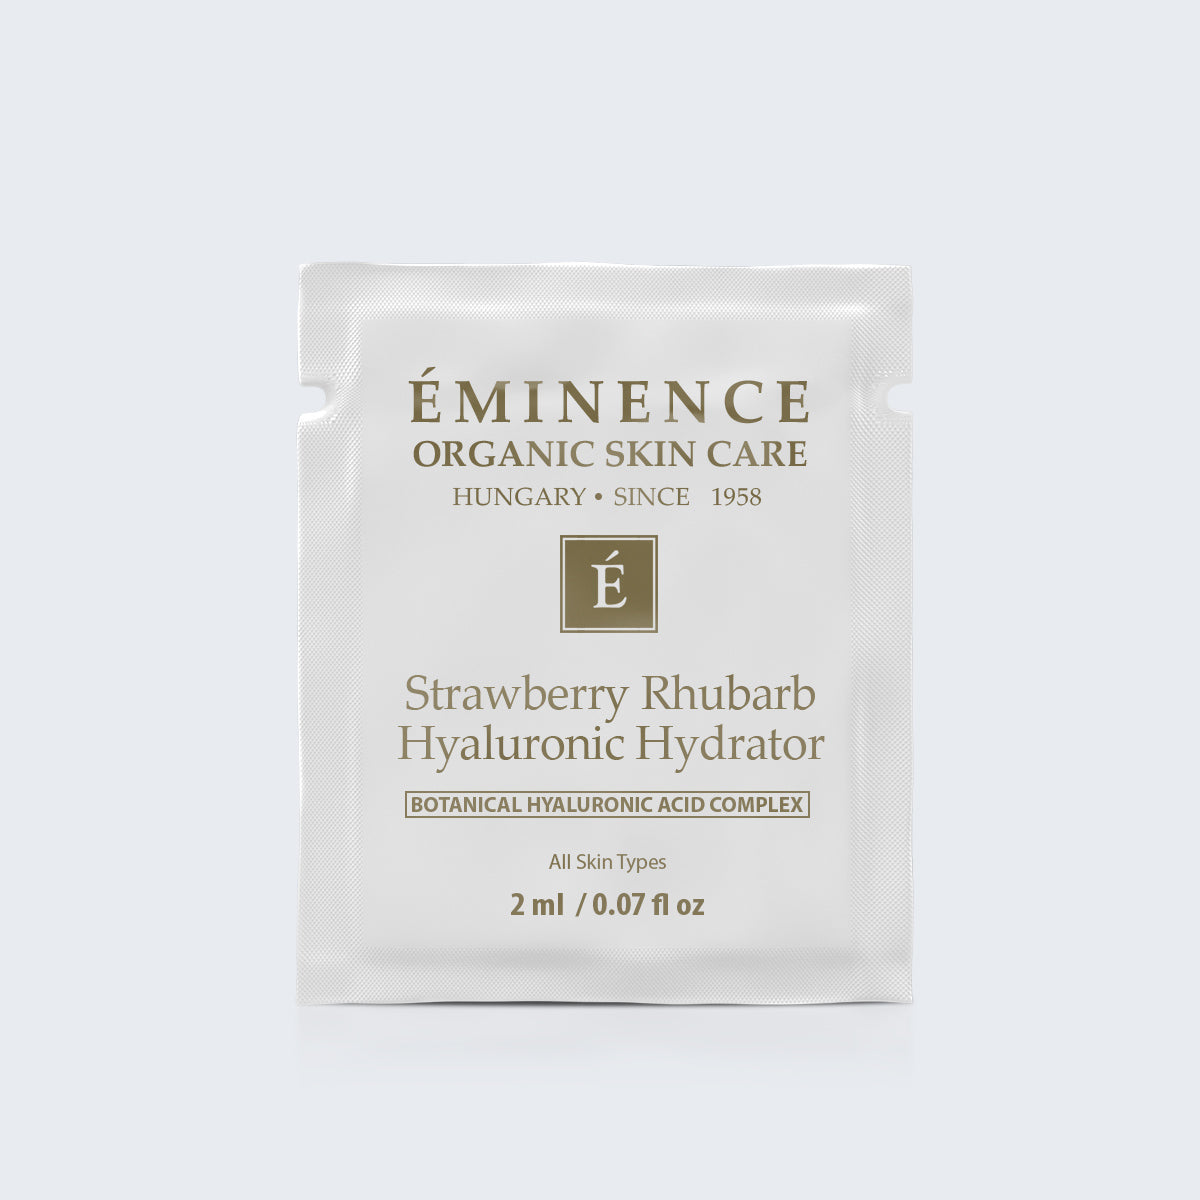 Eminence Organics Strawberry Rhubarb Hyaluronic Hydrator Card Sample